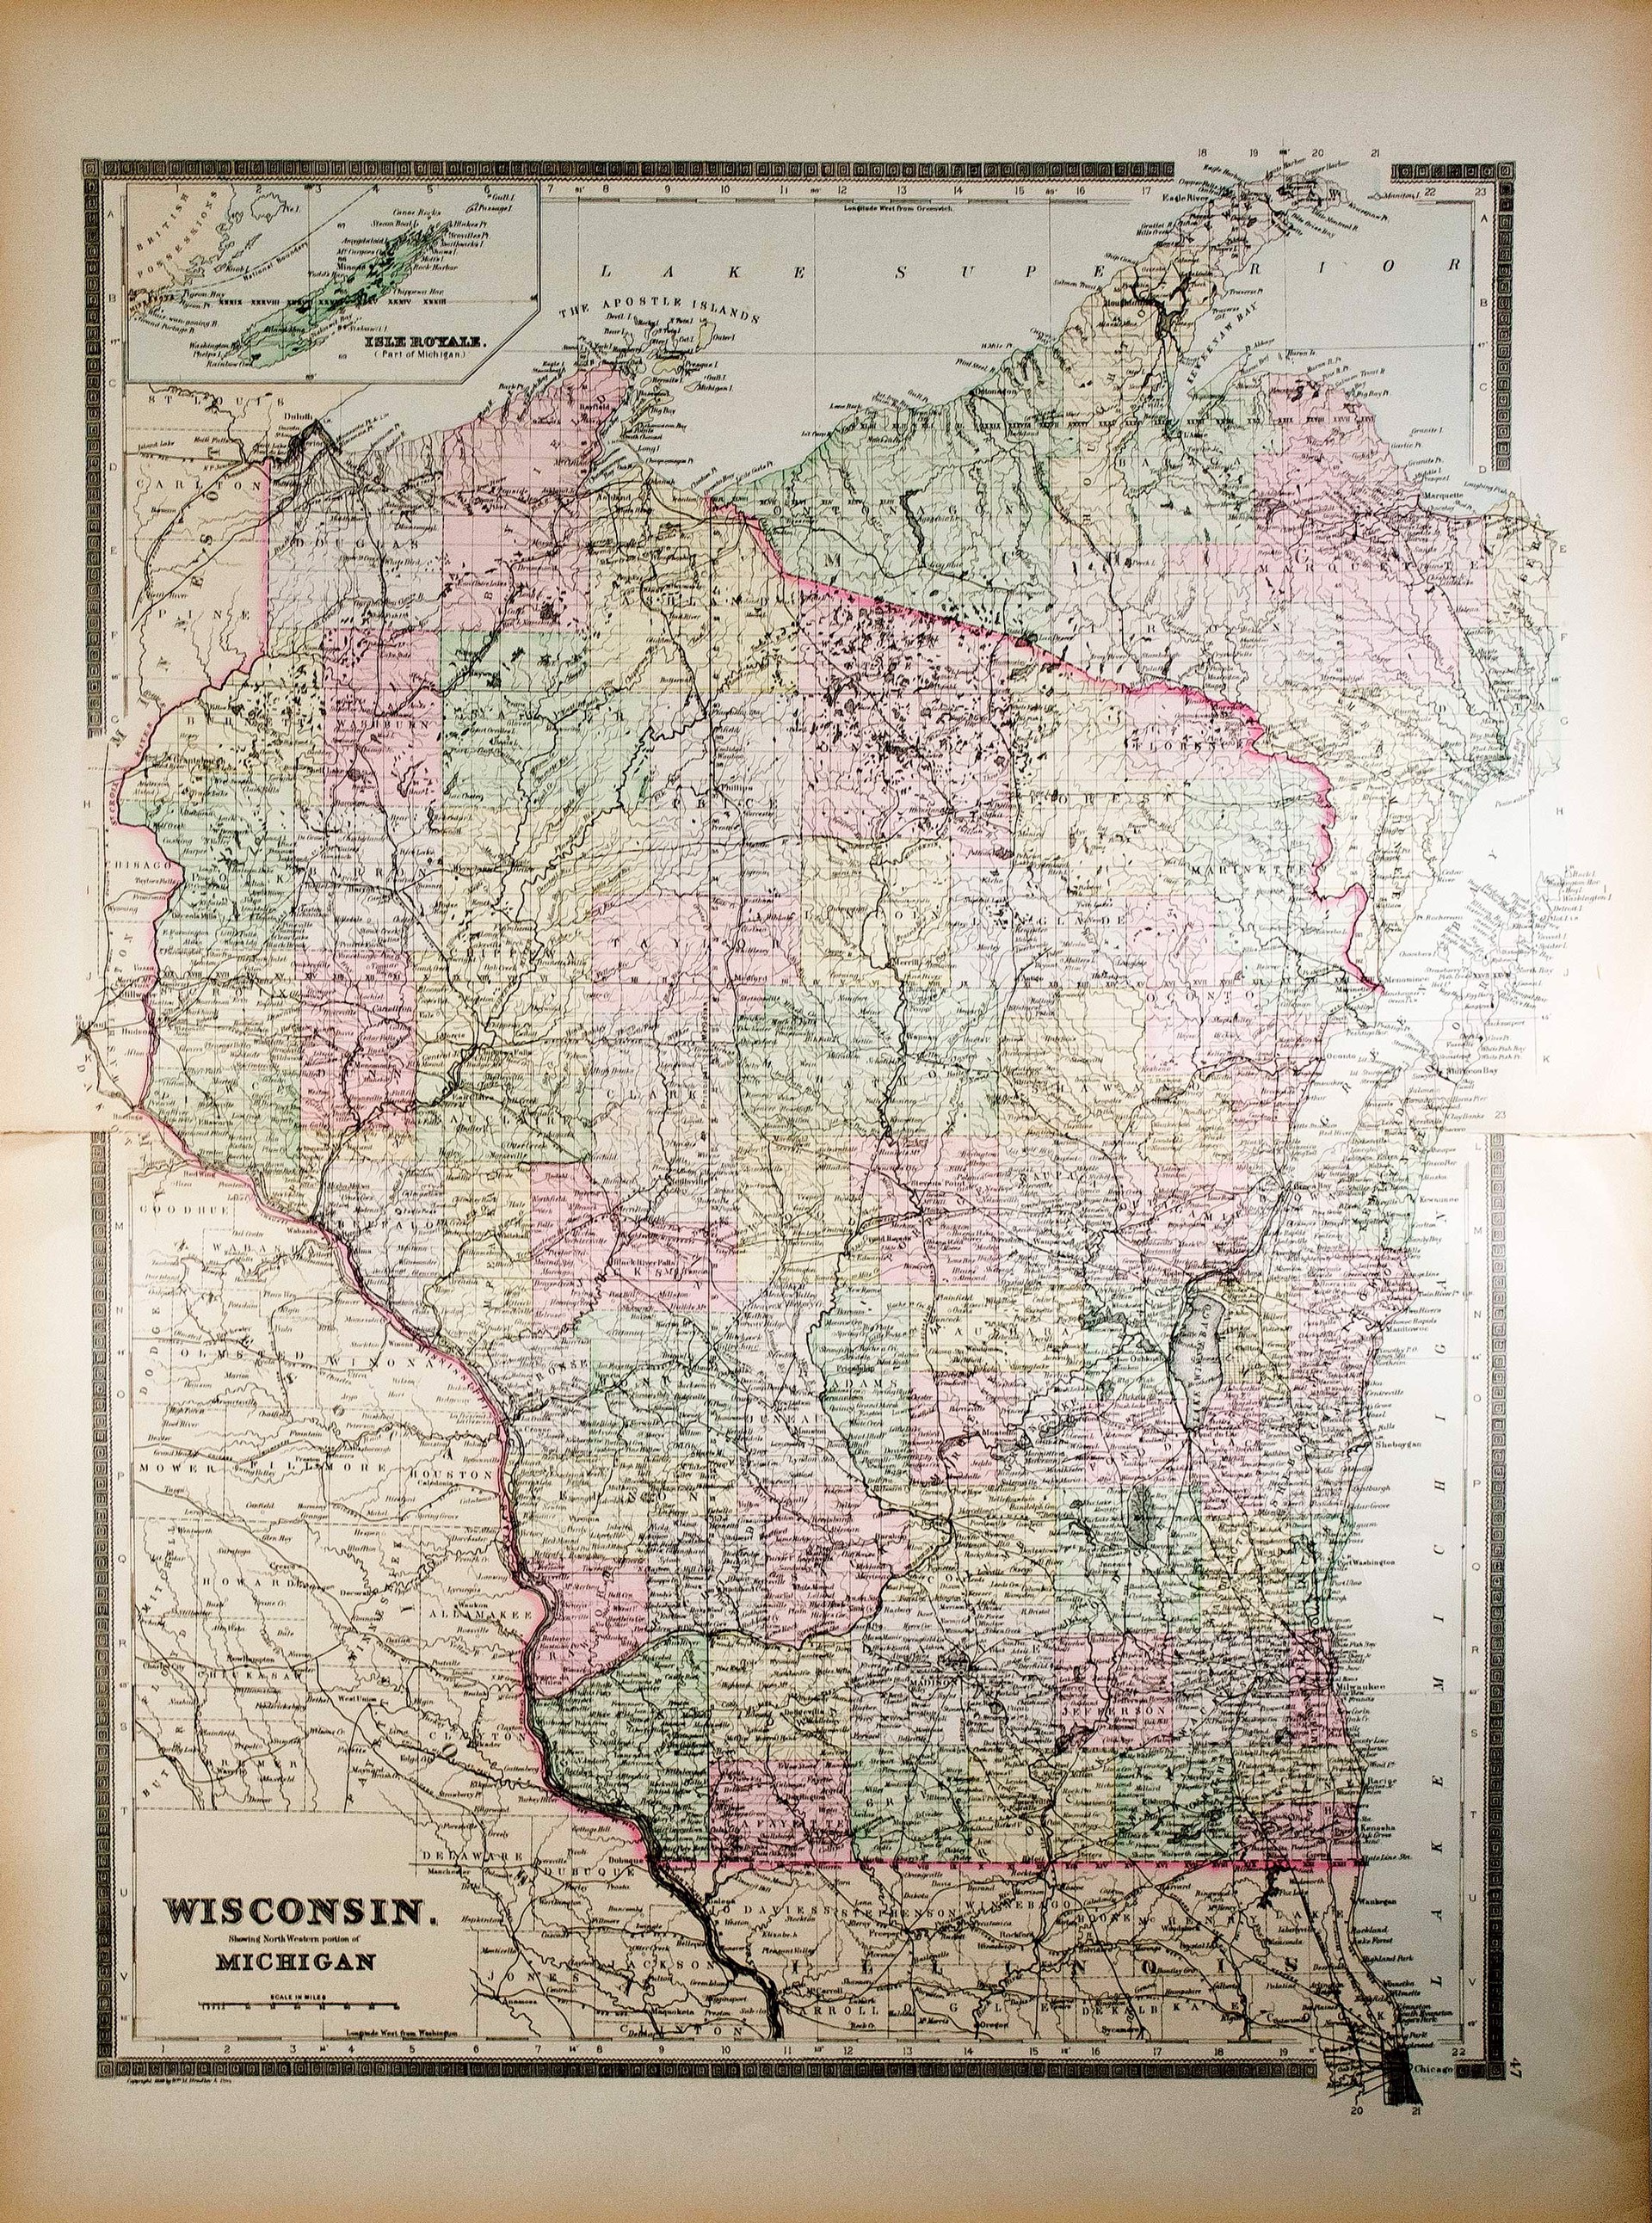 Wisconsin Map Showing Northwestern Portion of Michigan by William M. Bradley & Bros.